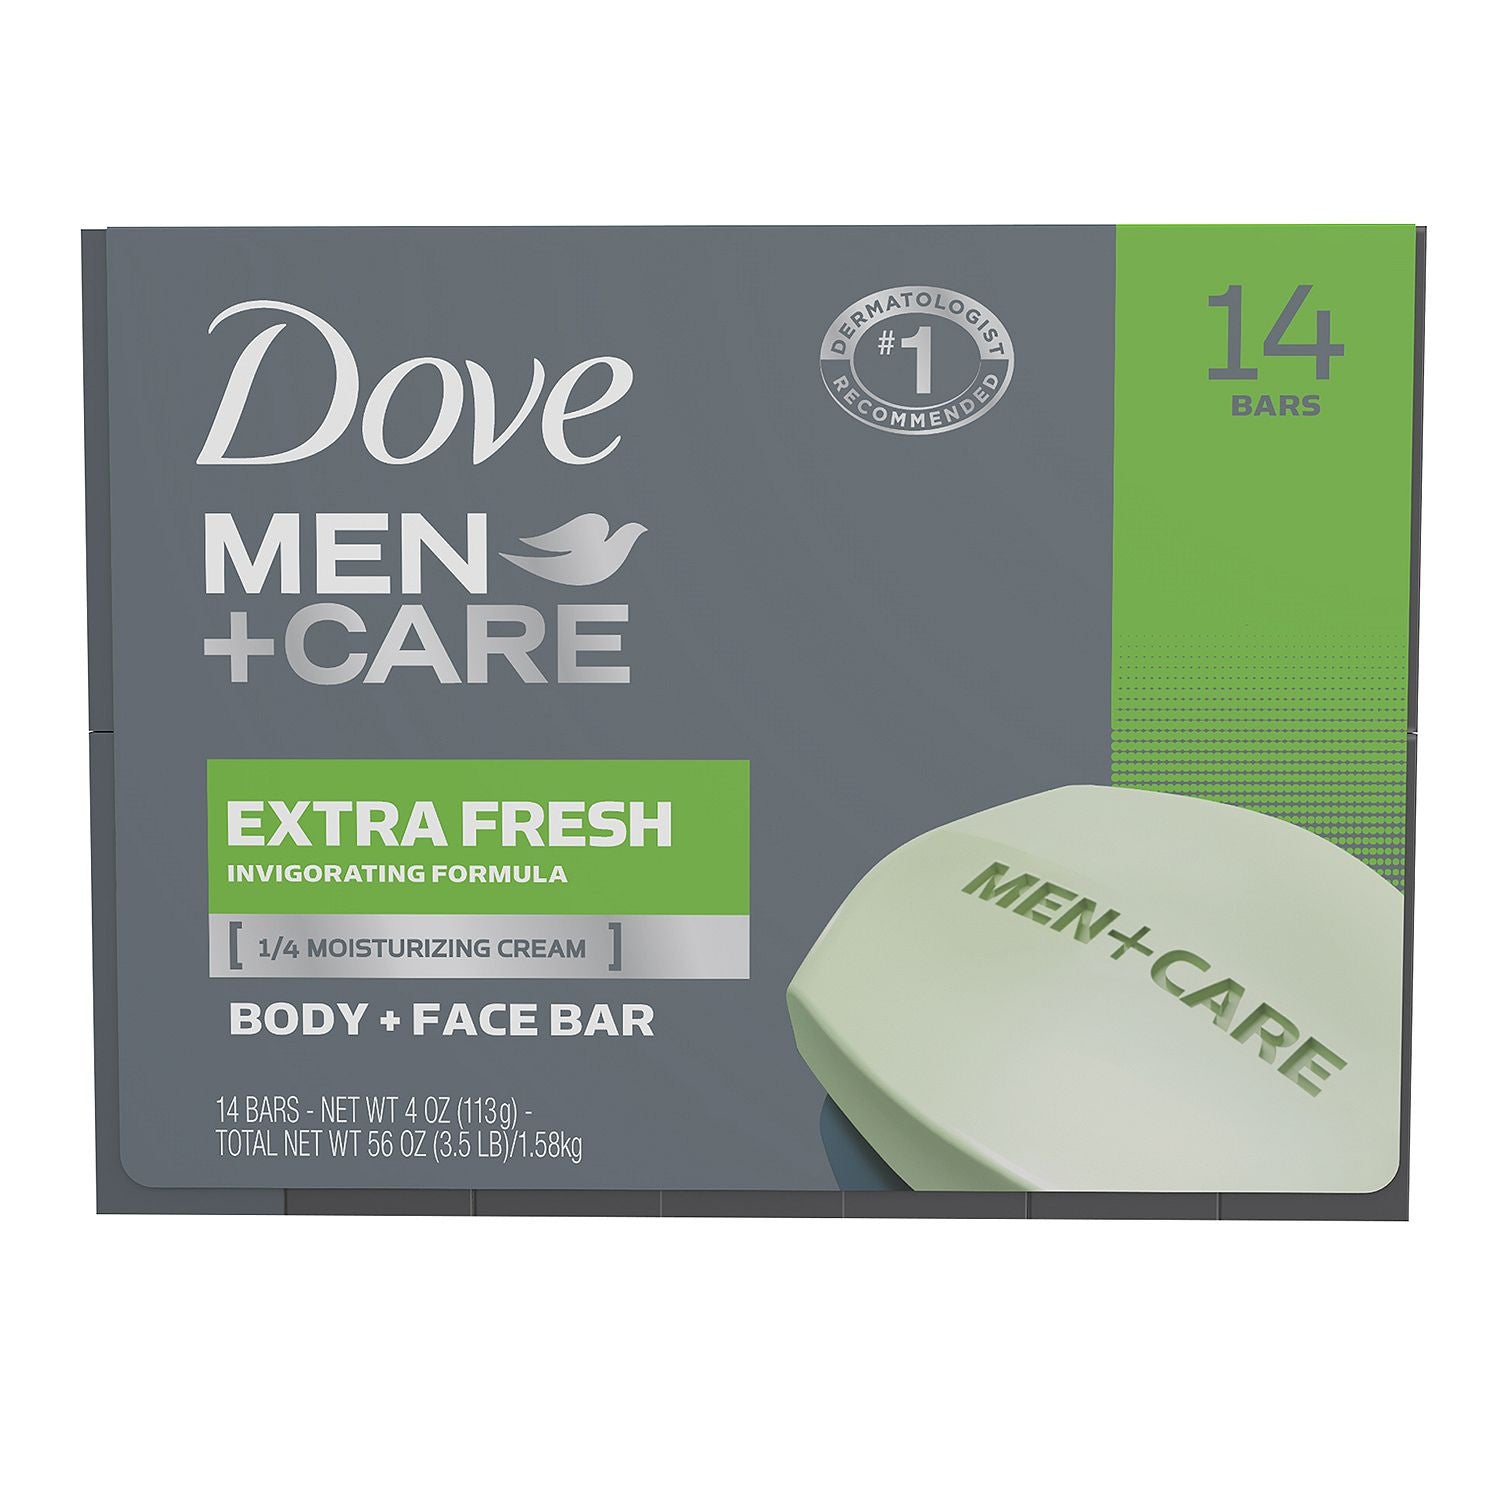 Dove Men+Care Body + Face Bar, Deep Clean - 4 pack, 4 oz bars